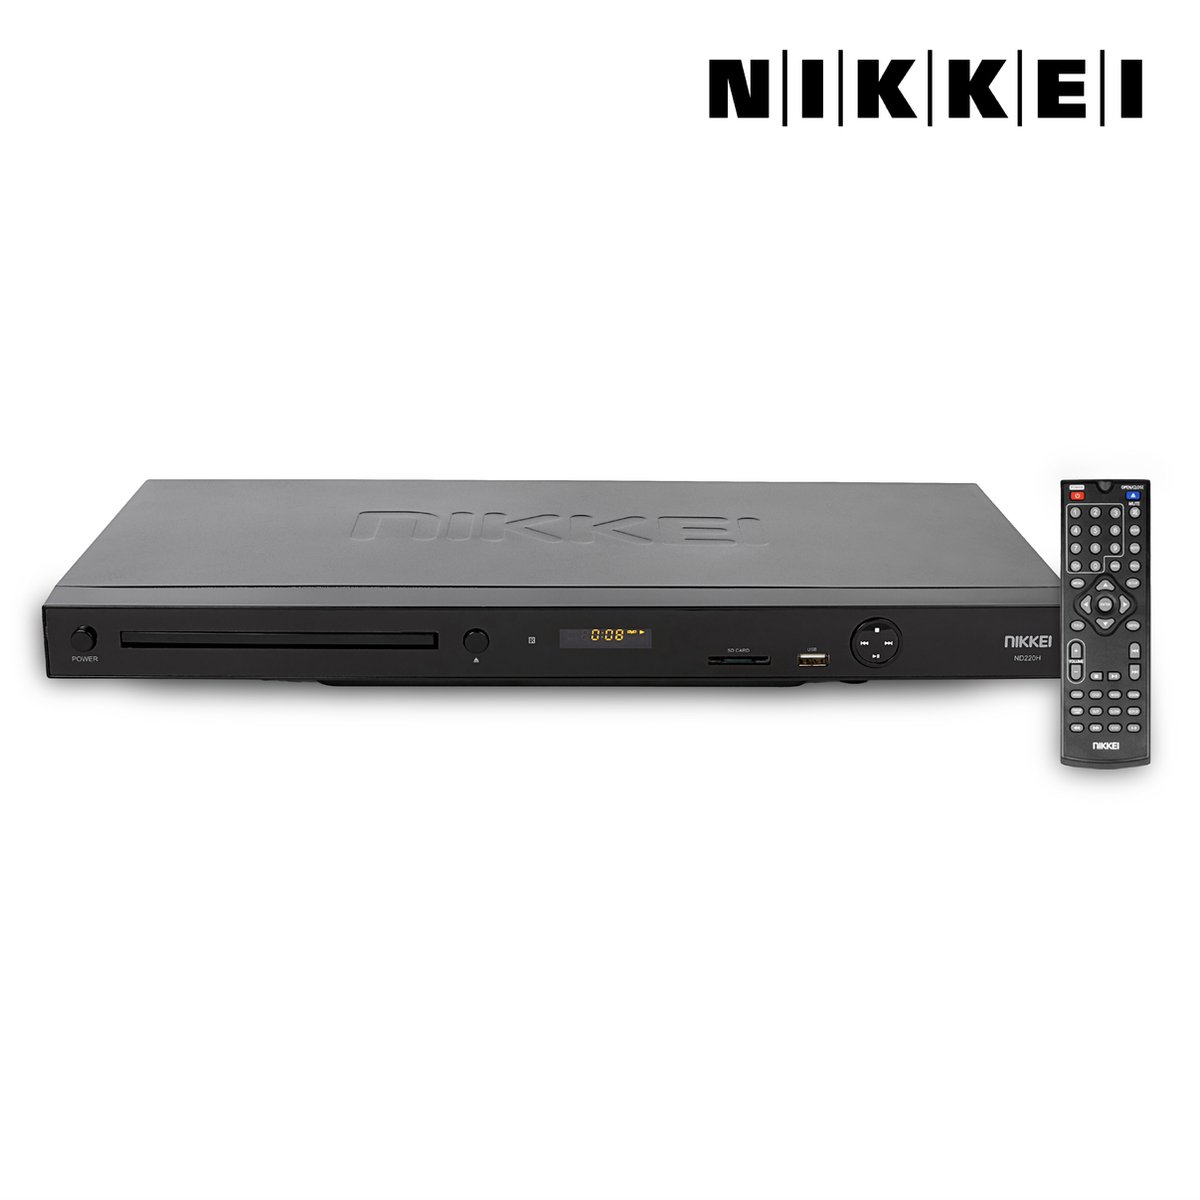 Nikkei ND220H DVD Speler met Full HD-upscaling, HDMI, SCART, S-Video,  USB-poort en SD... | bol.com